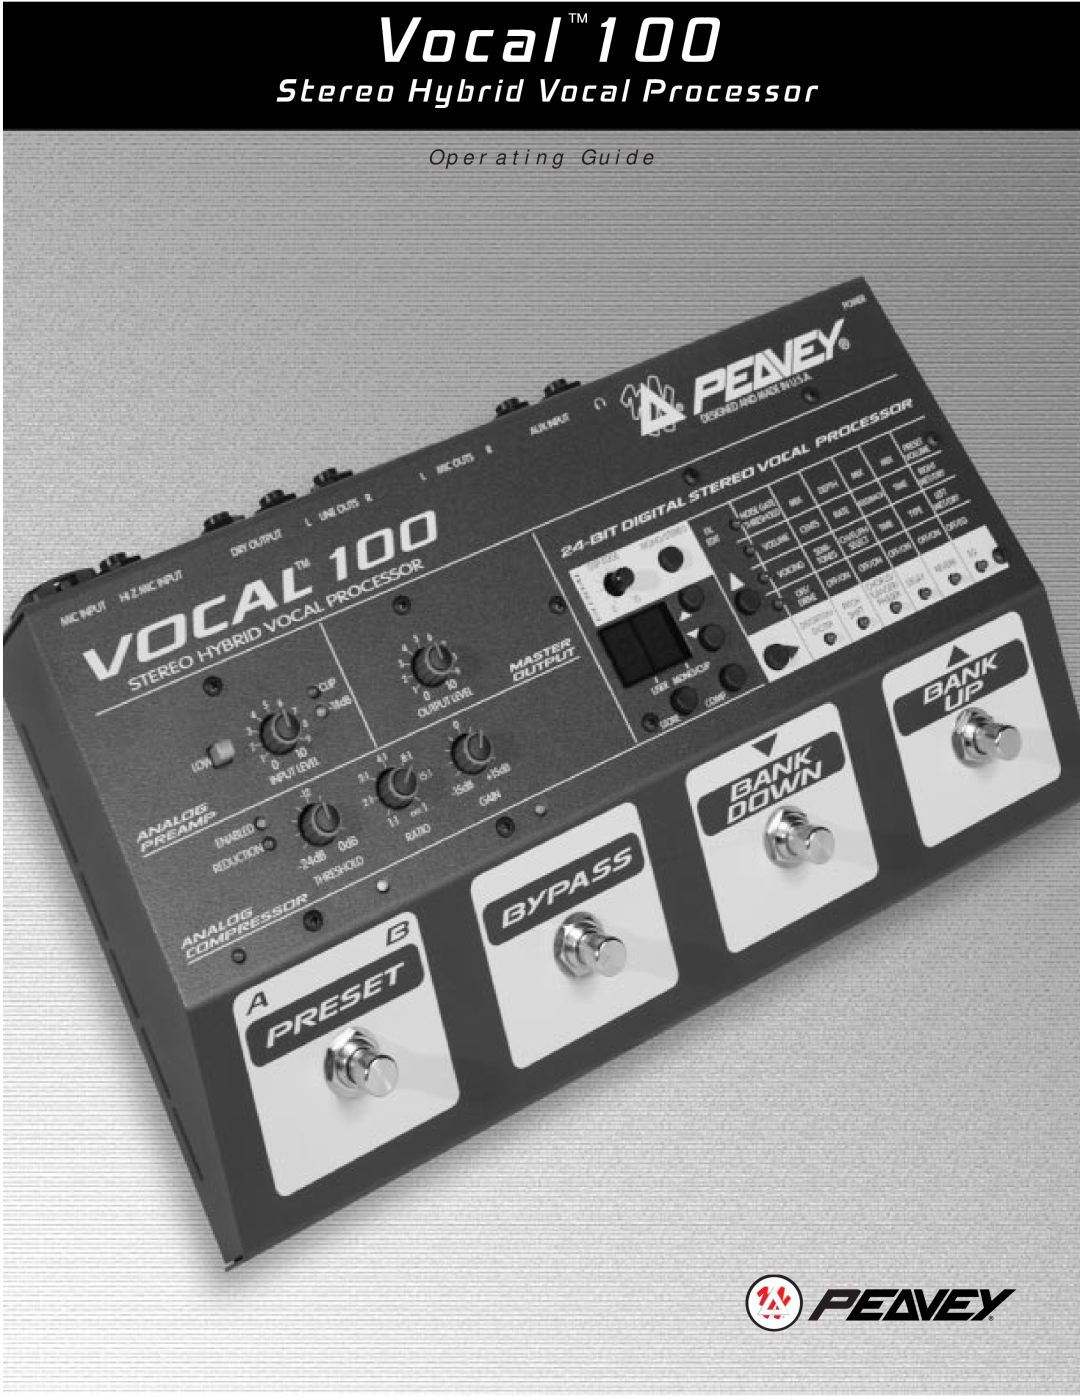 Peavey 100 manual Stereo Hybrid Vocal Processor, O p e r a t i n g G u i d e 